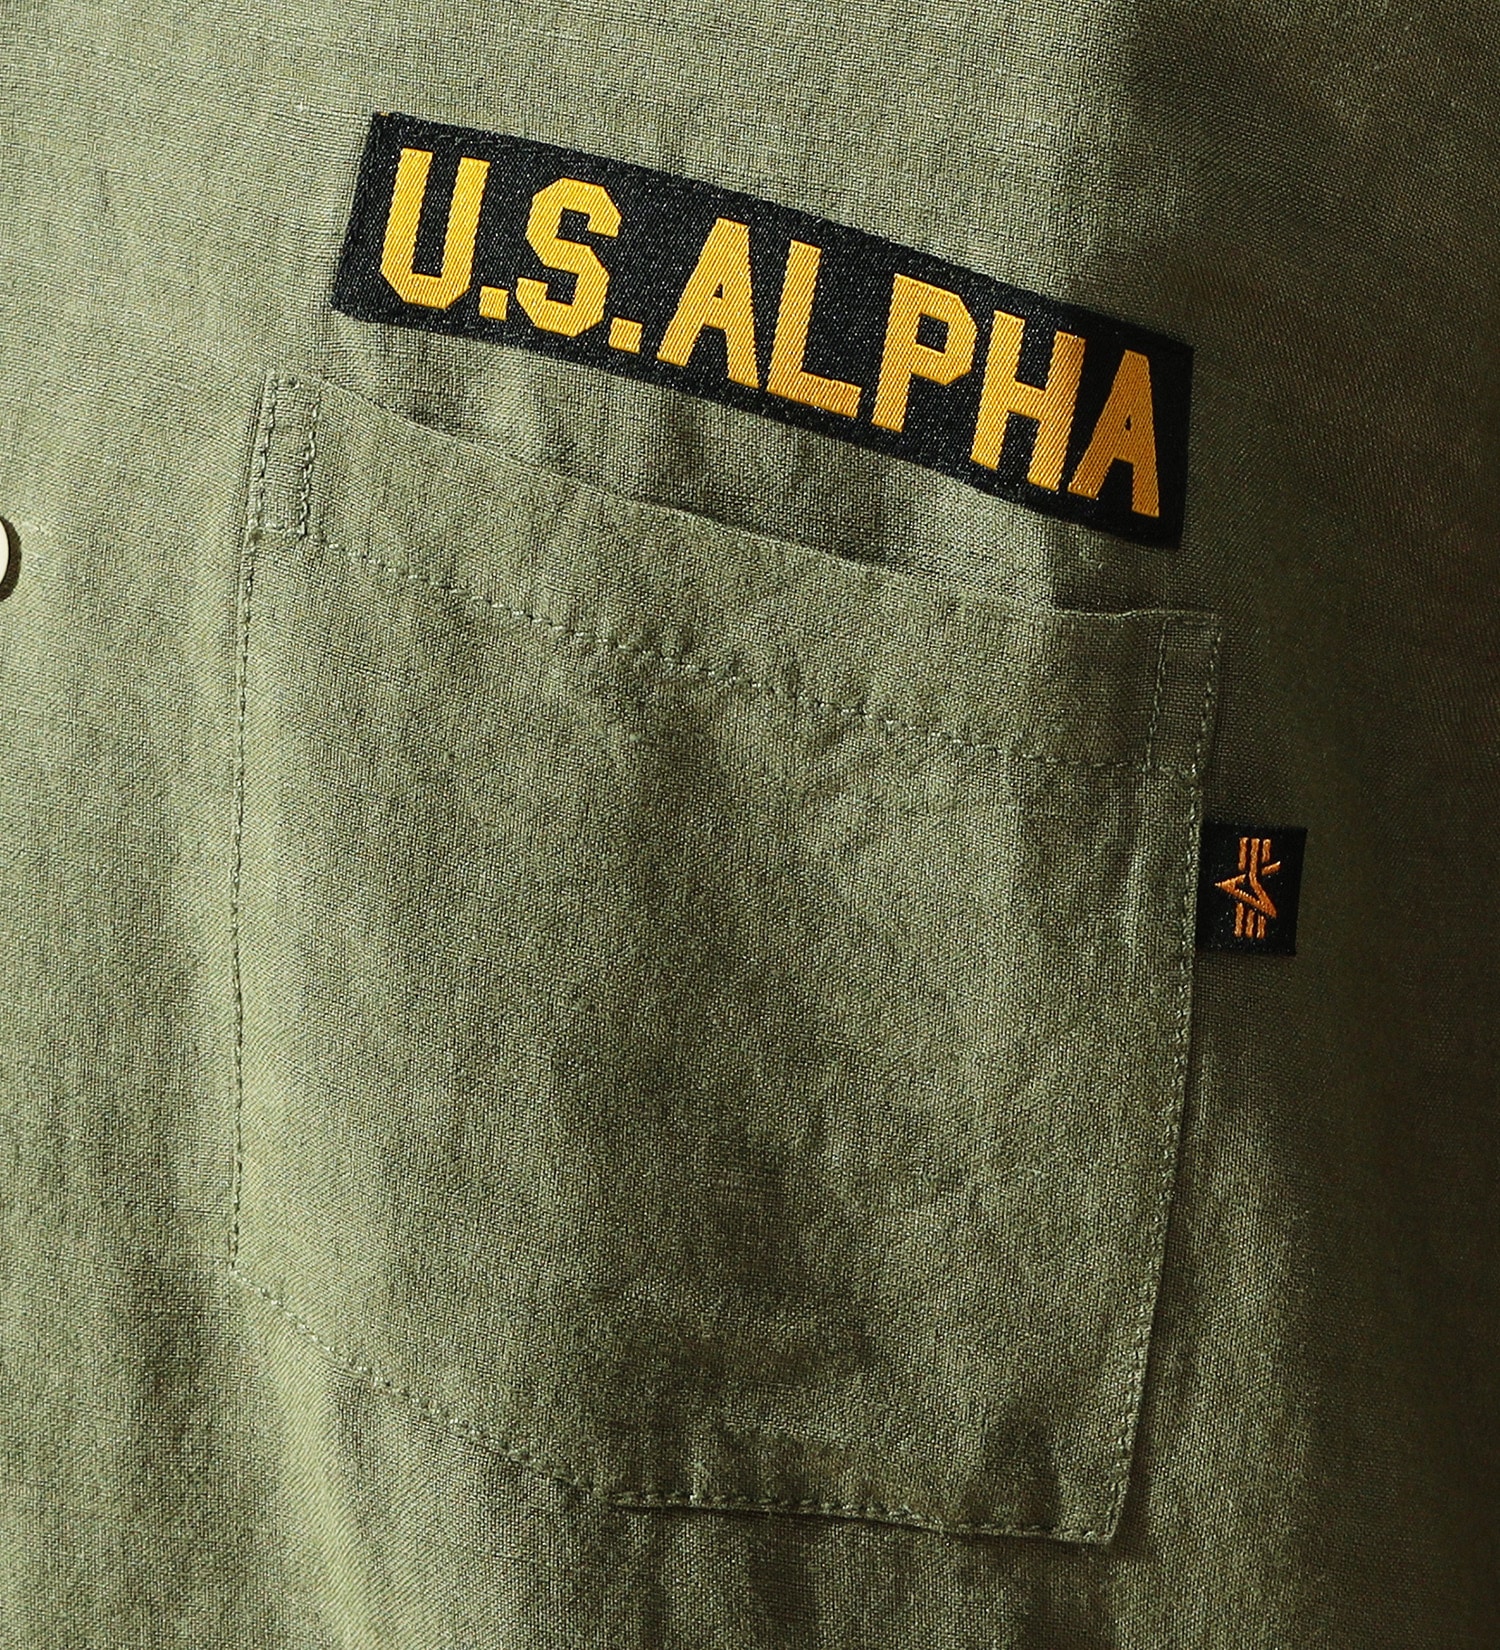 ALPHA(アルファ)のユーティリティリネンシャツ 半袖|トップス/シャツ/ブラウス/メンズ|オリーブ